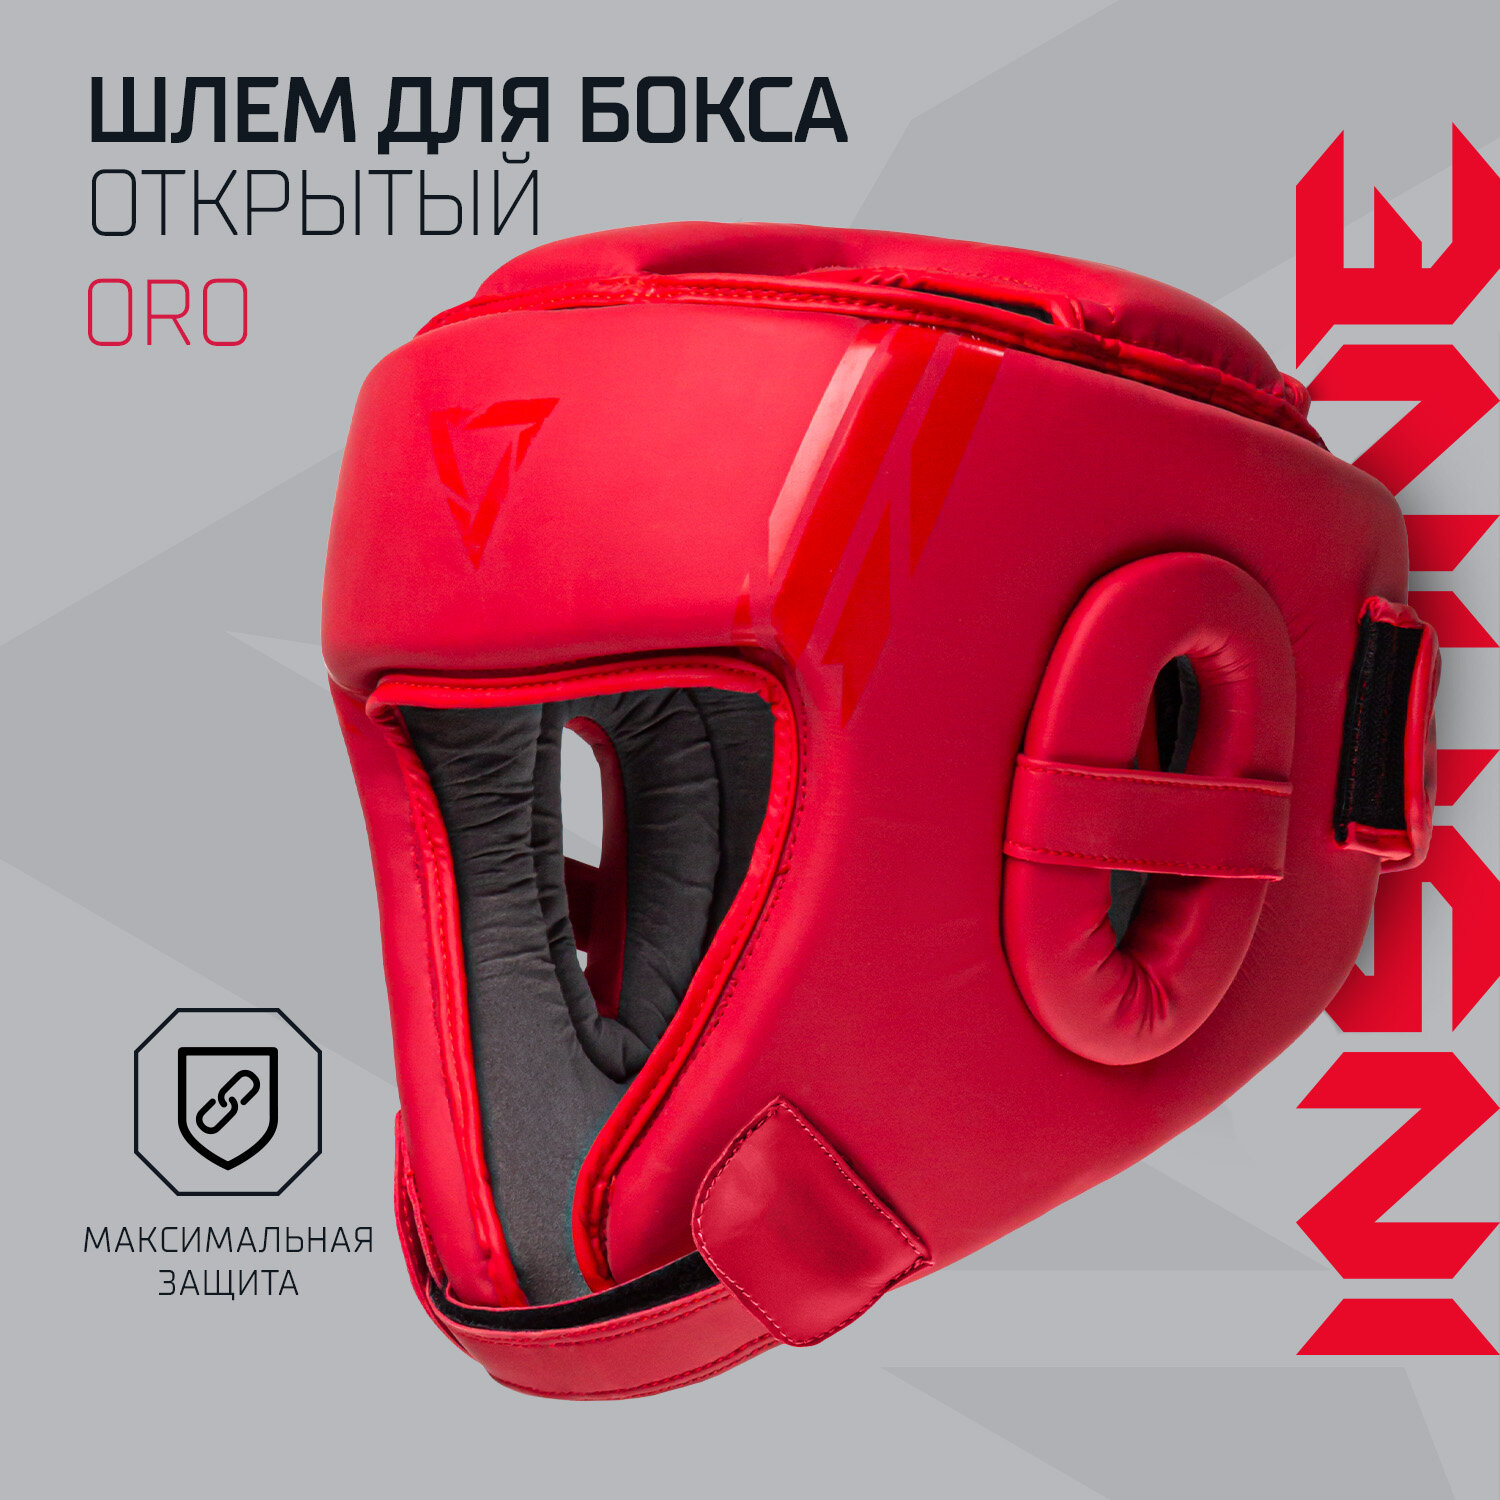 Шлем открытый INSANE ORO IN23-HG300, ПУ, красный, размер XL